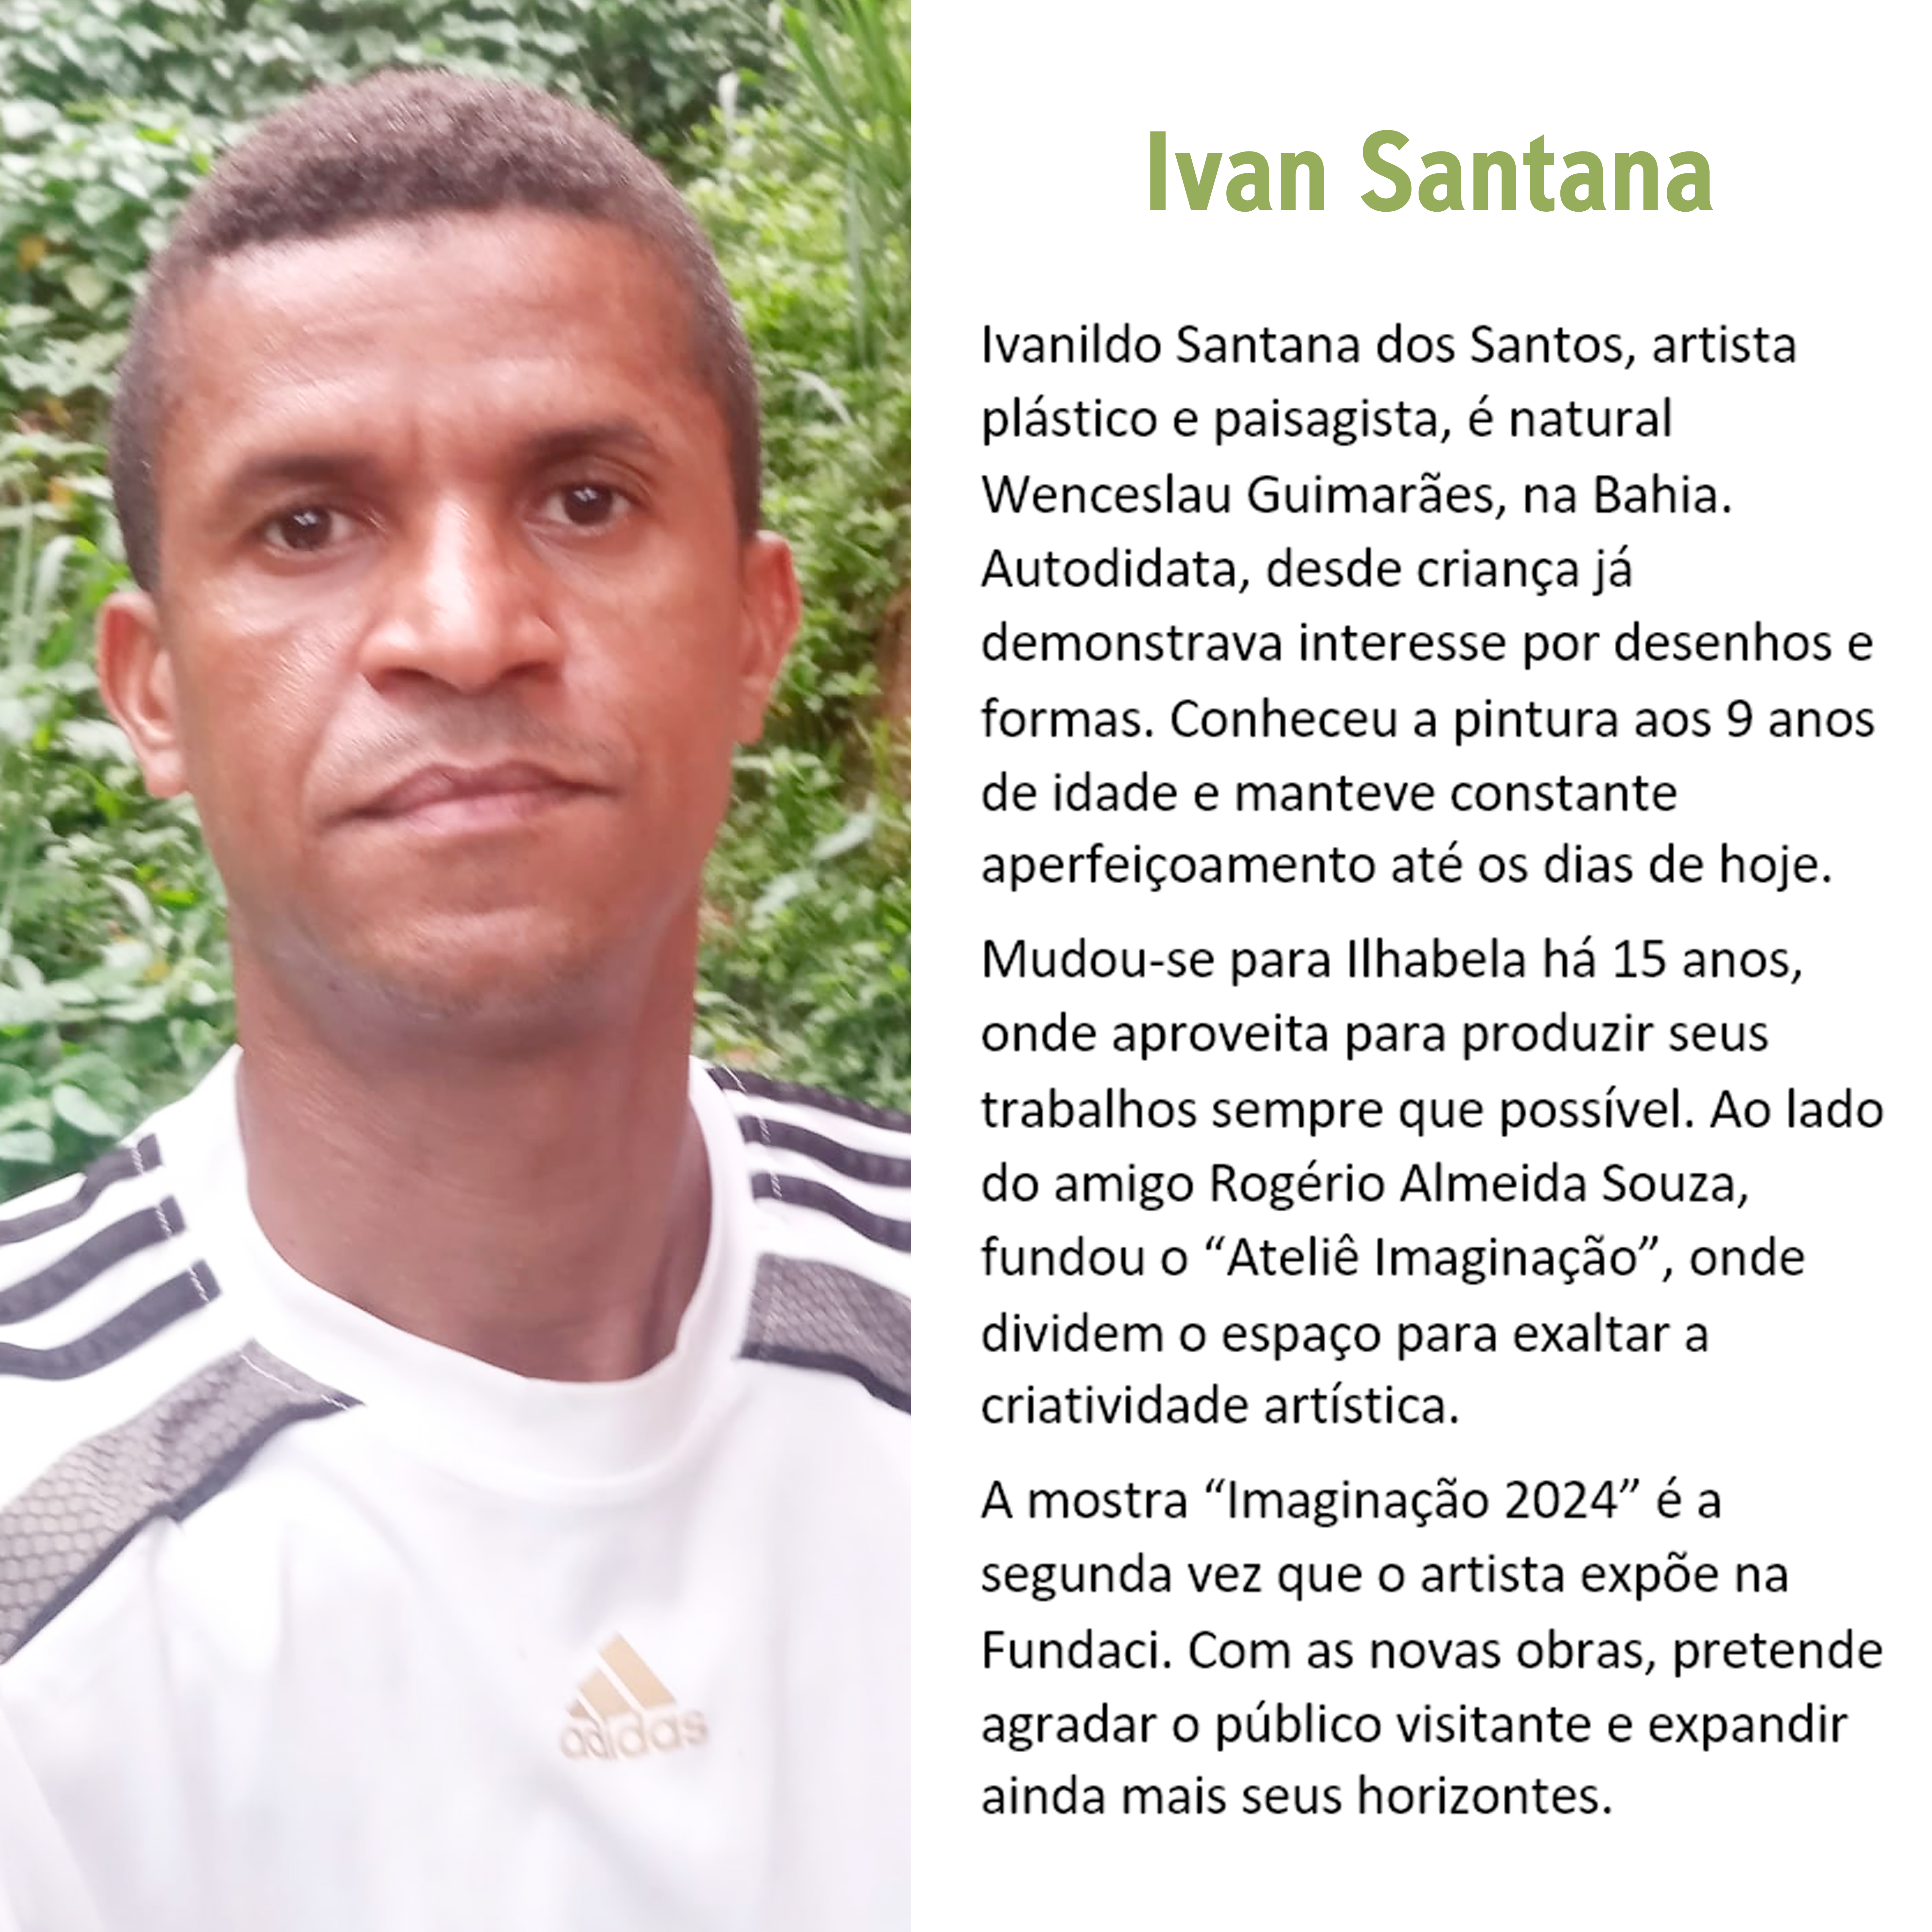 Ivan Santana bio